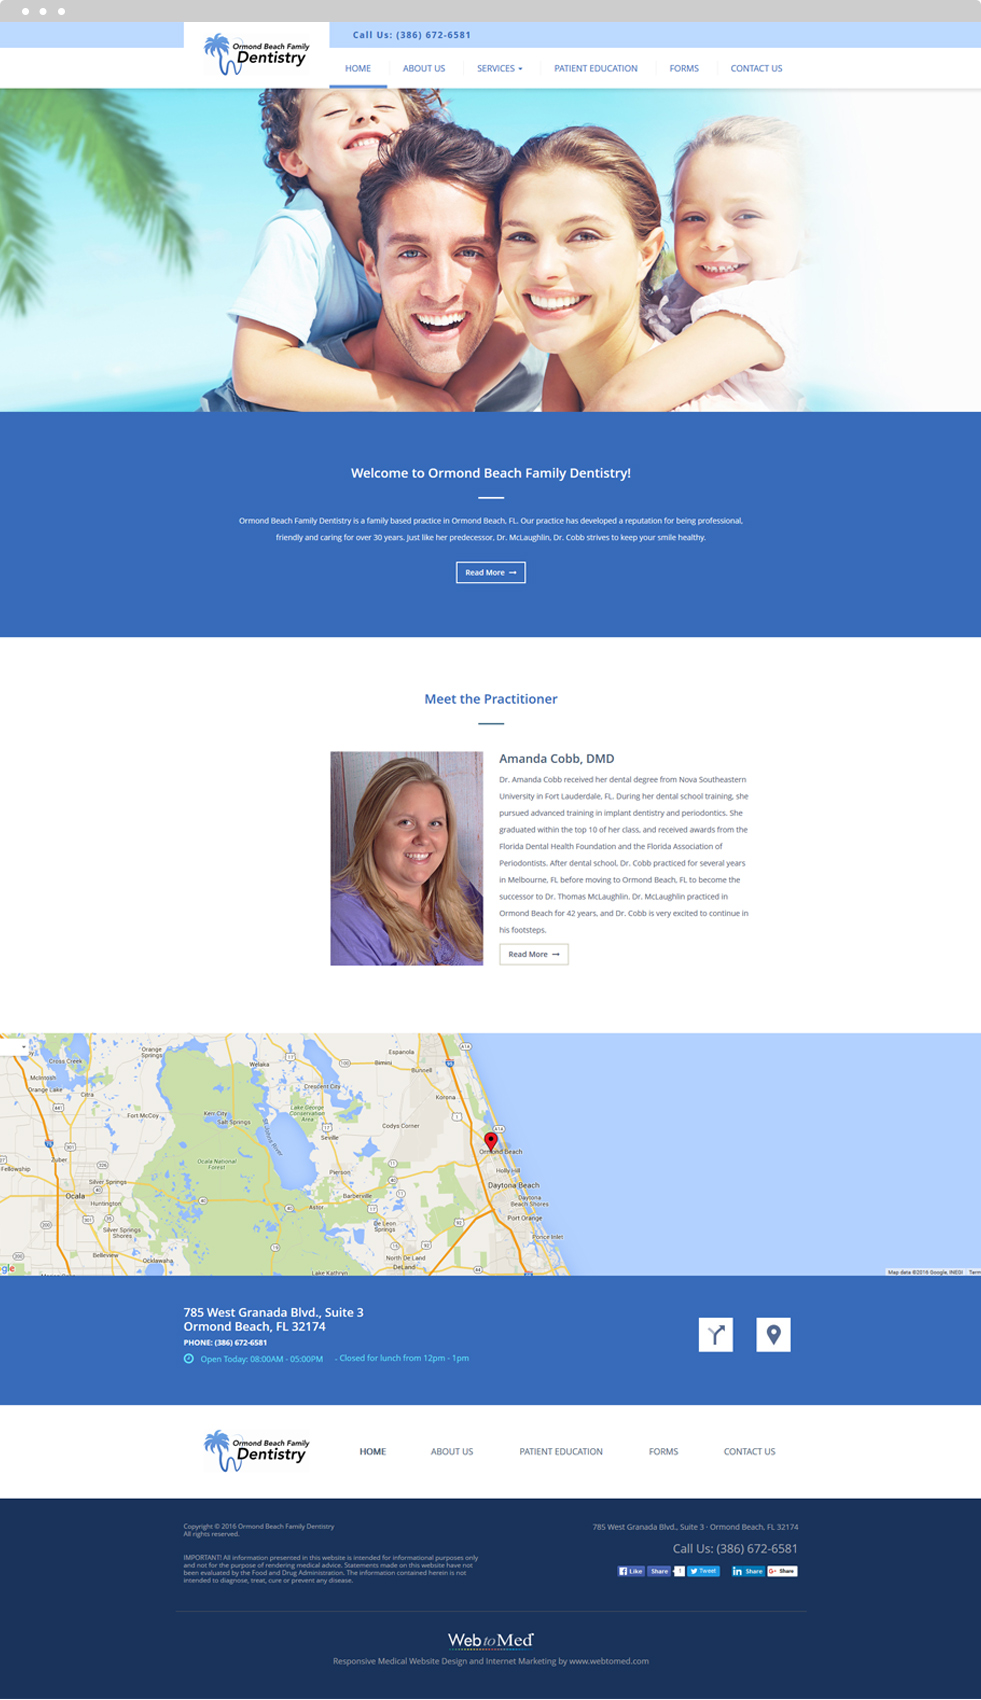 Dental Website Design - Ormond Beach Family Dentistry - Homepage